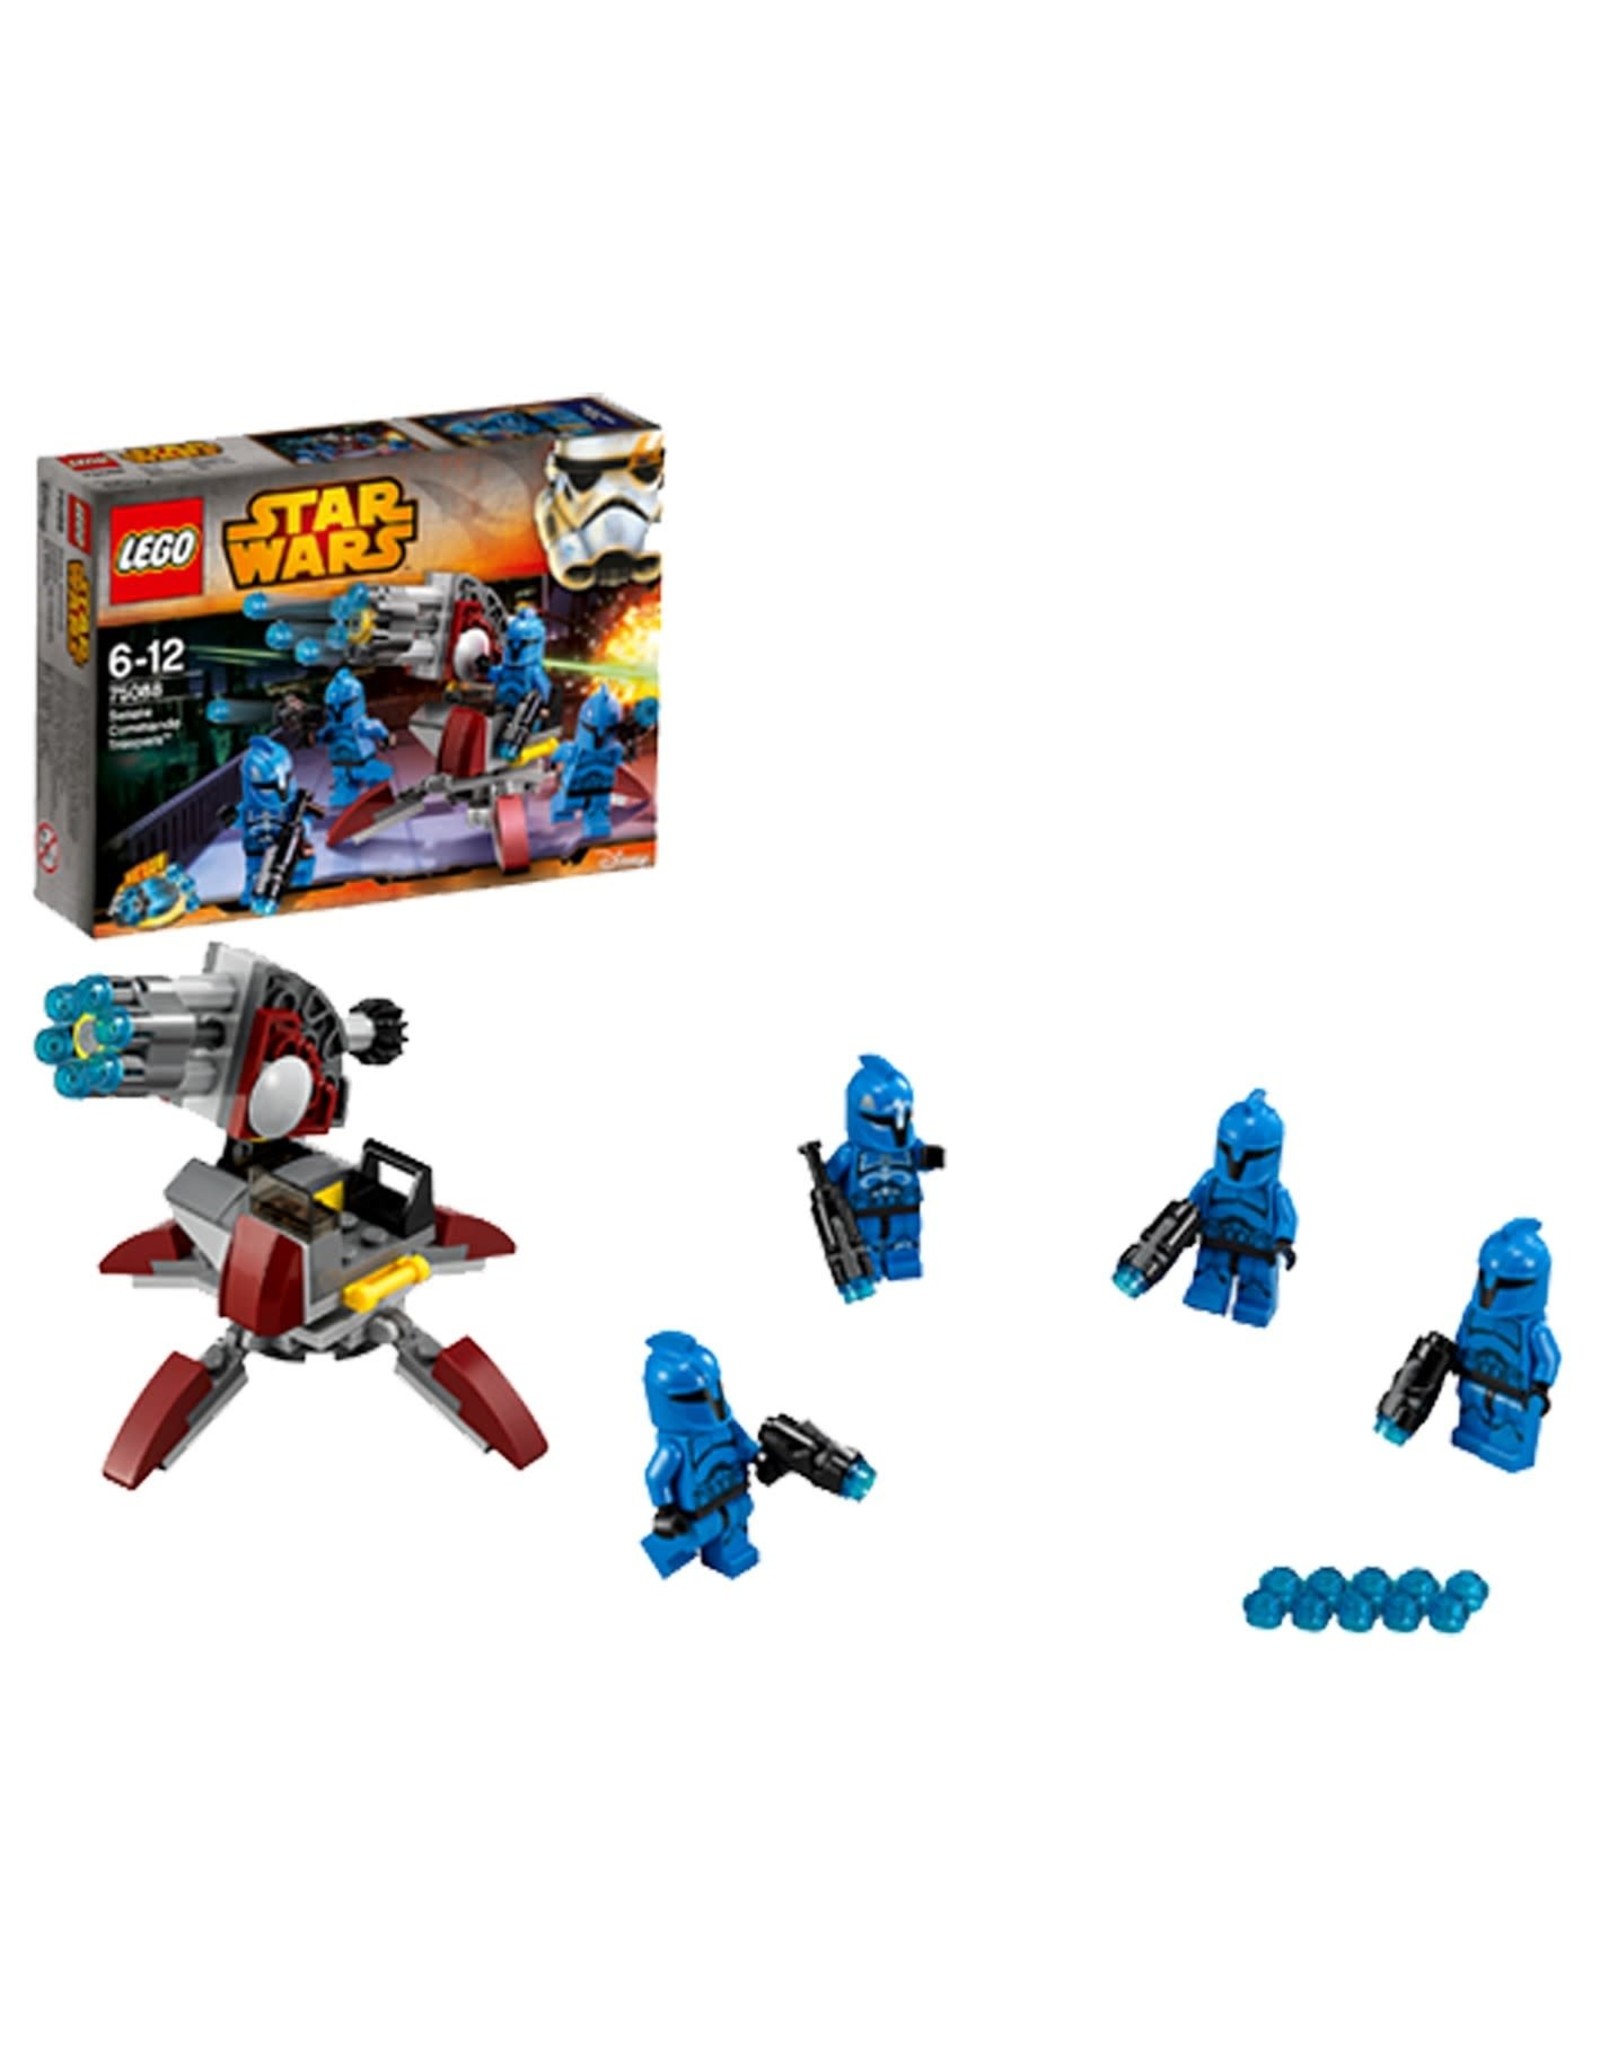 LEGO Lego Star Wars 75088 Senate Commando Troopers